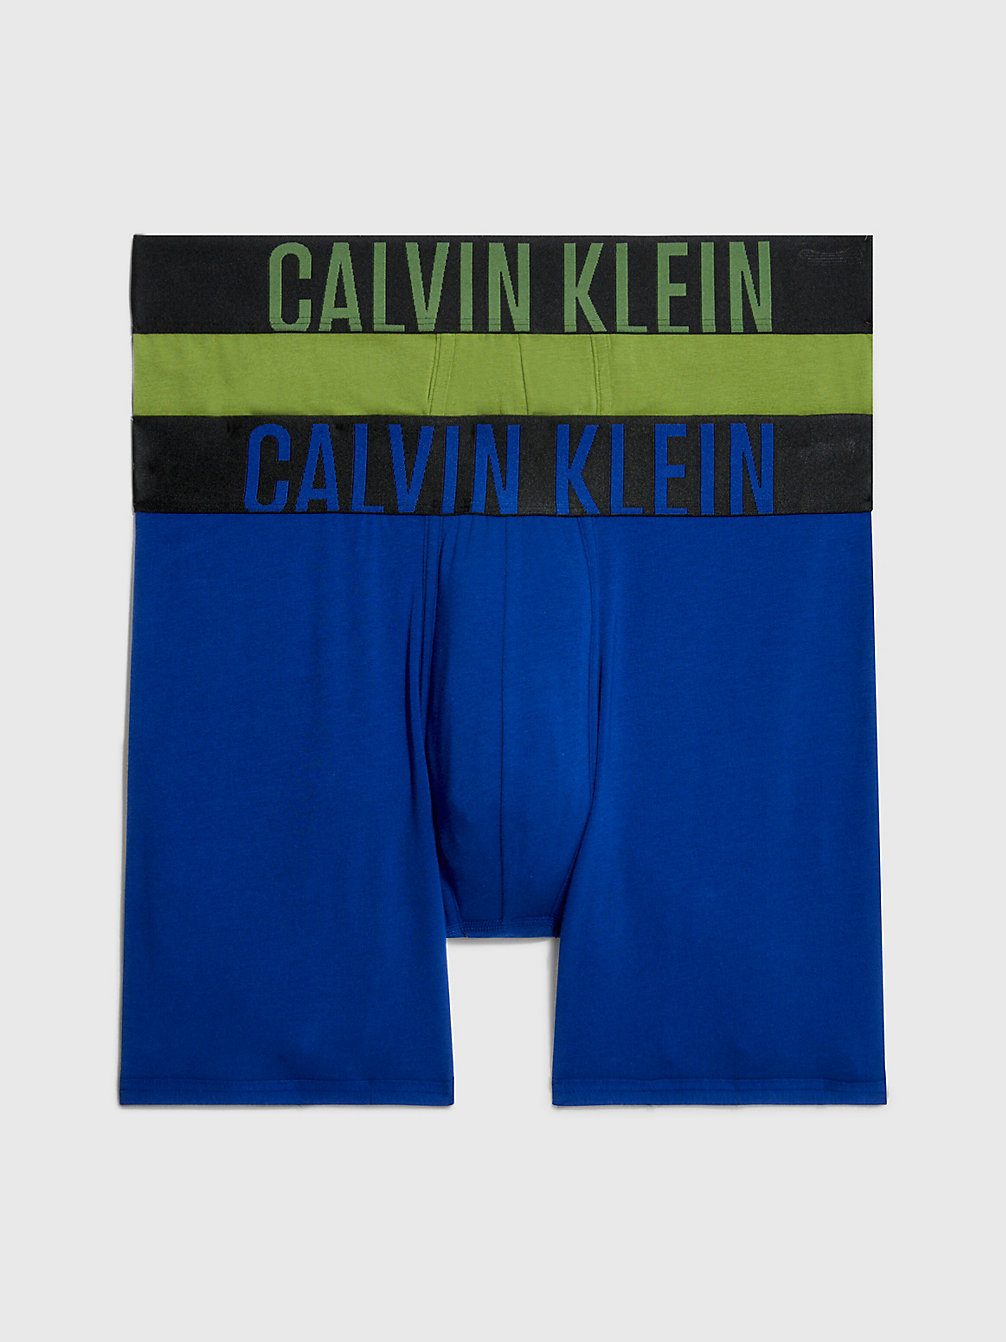 Lot De 2 Boxers - Intense Power > MIDNIGHT BLUE, UNIQUE JADE > undefined hommes > Calvin Klein